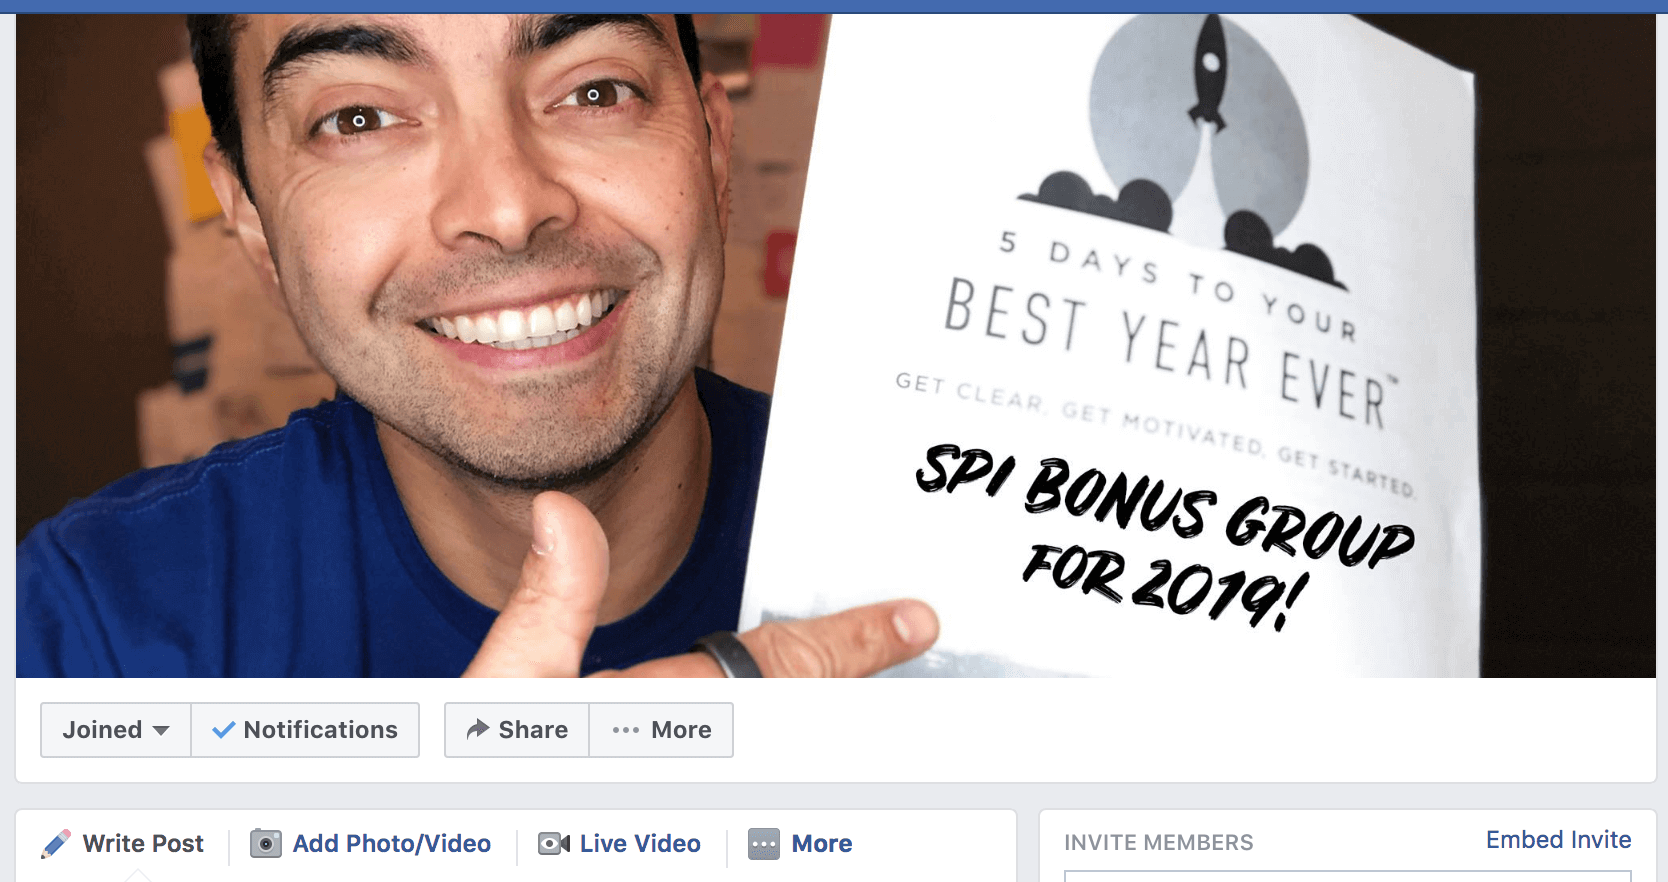 Screenshot of the SPI Facebook Bonus Group 2019